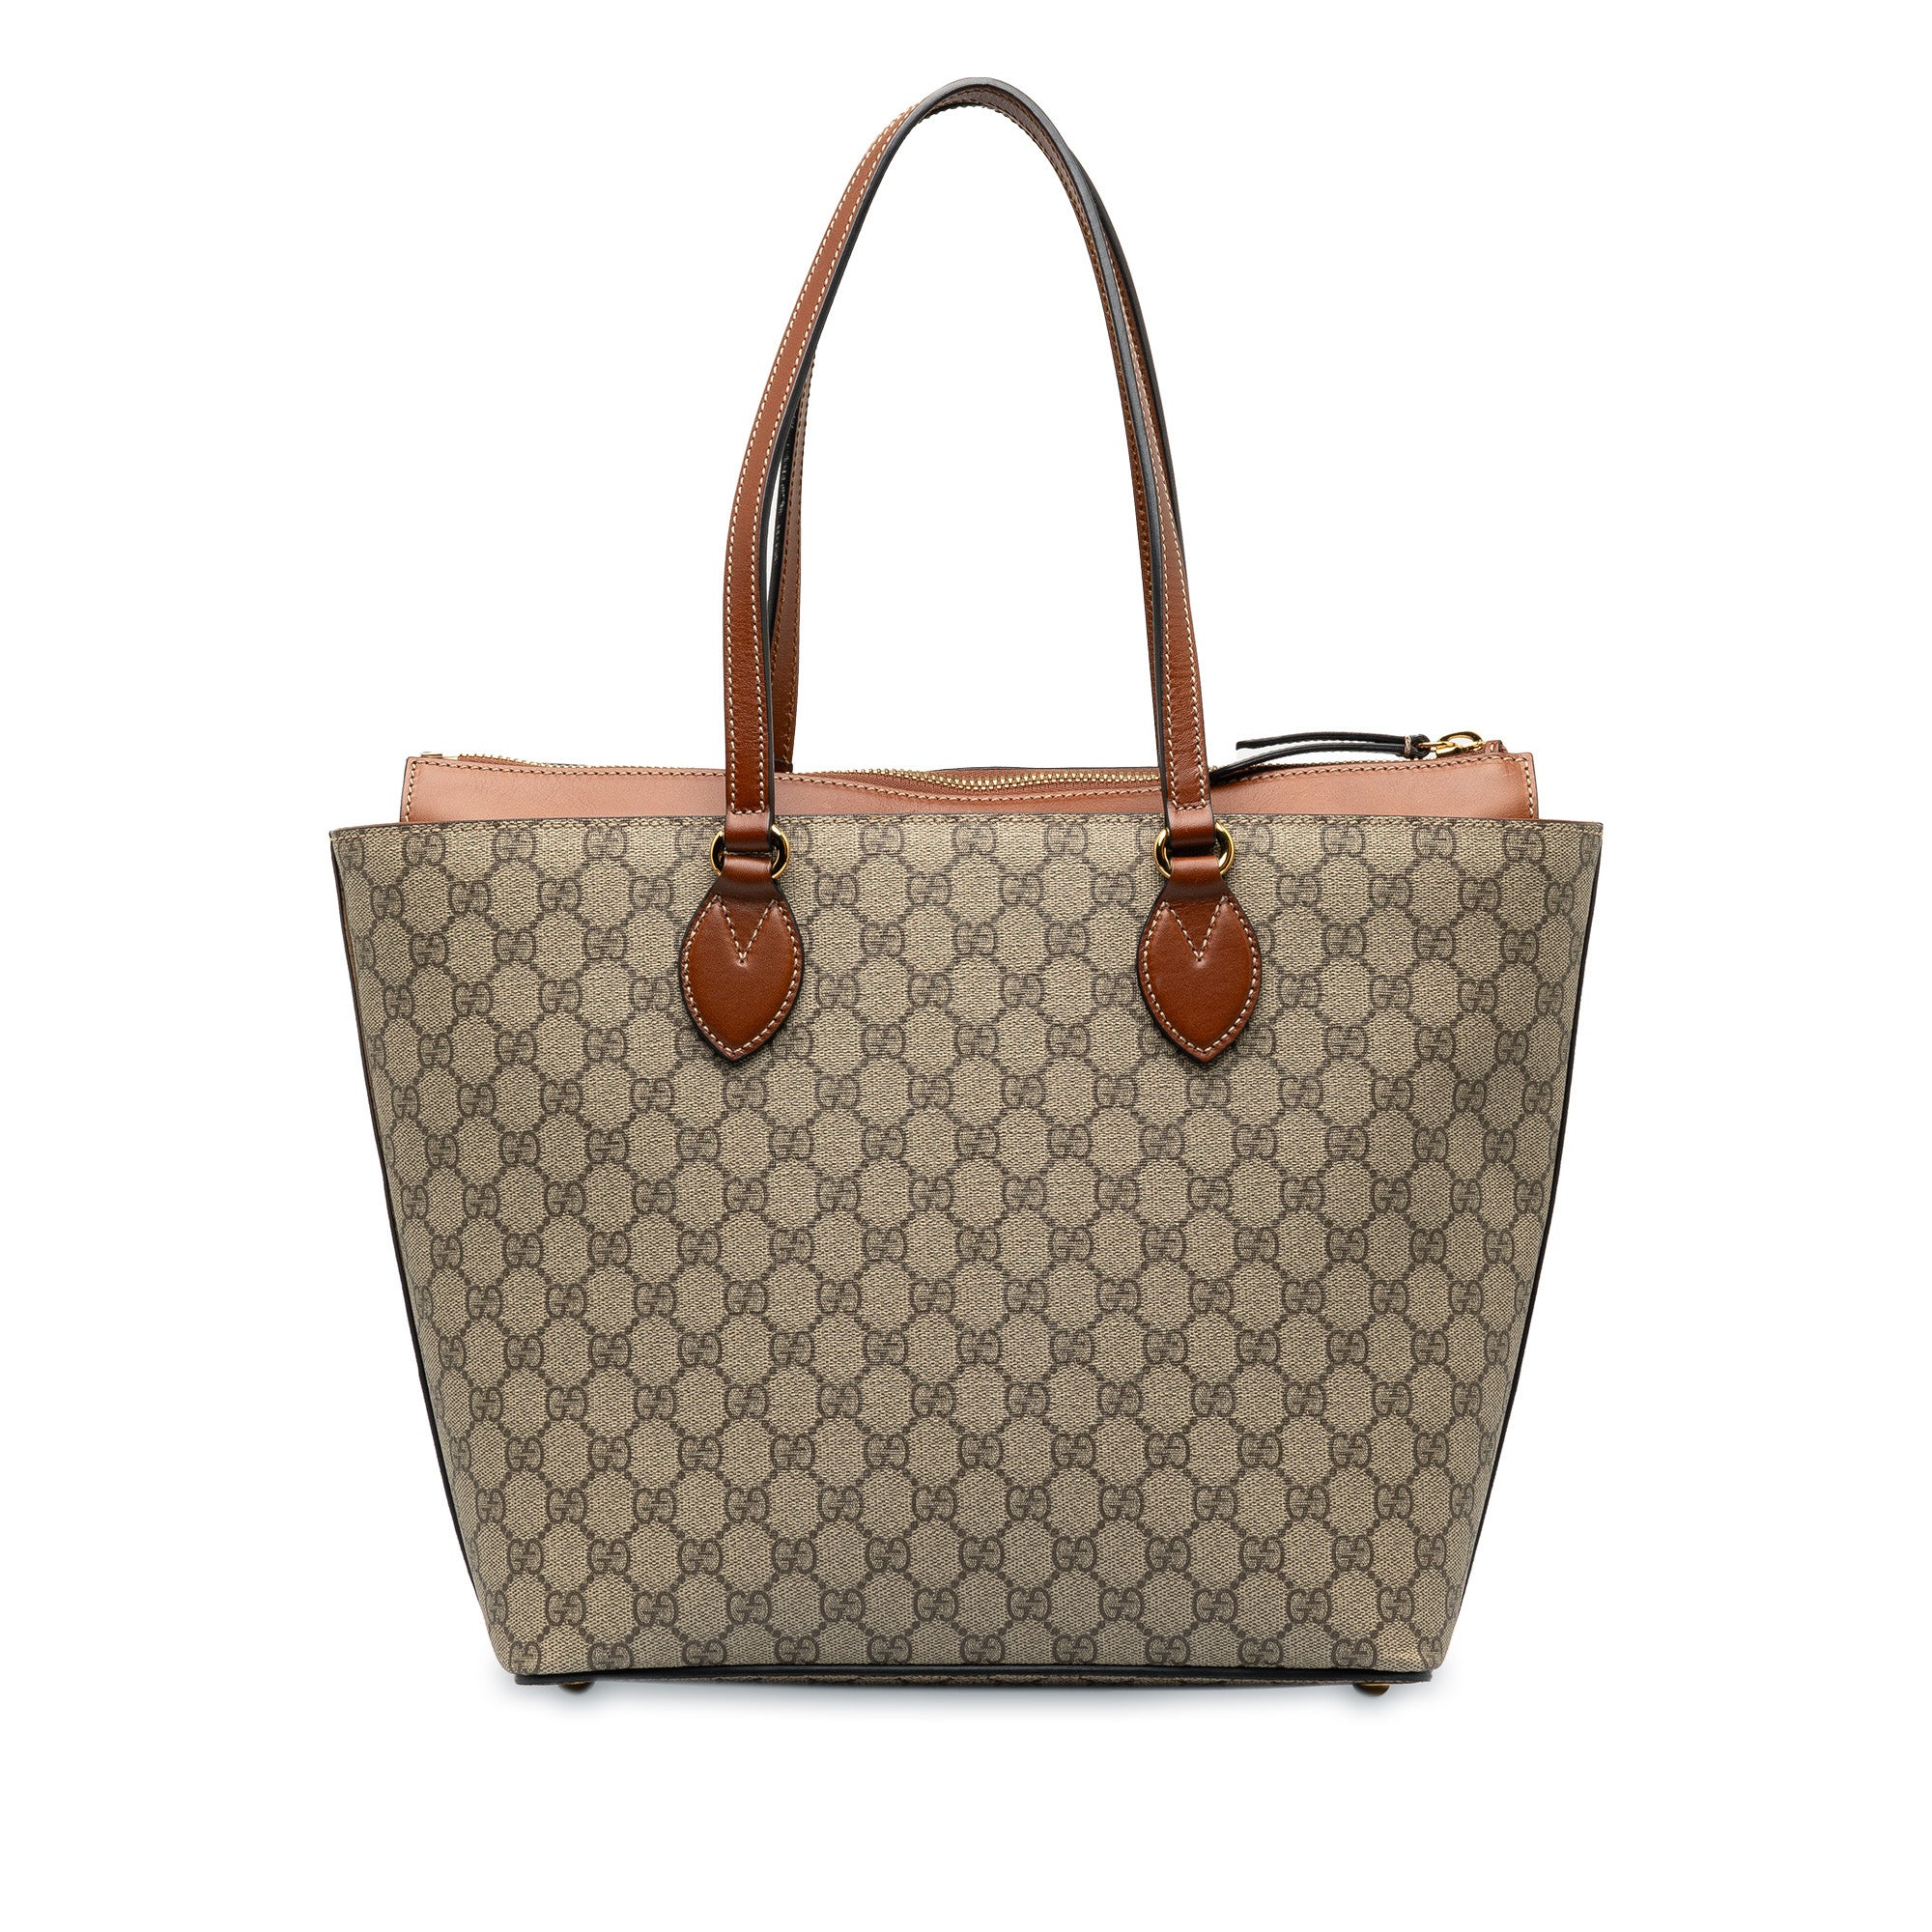 Gucci Beige & Black Small GG Marmont Shoulder Bag